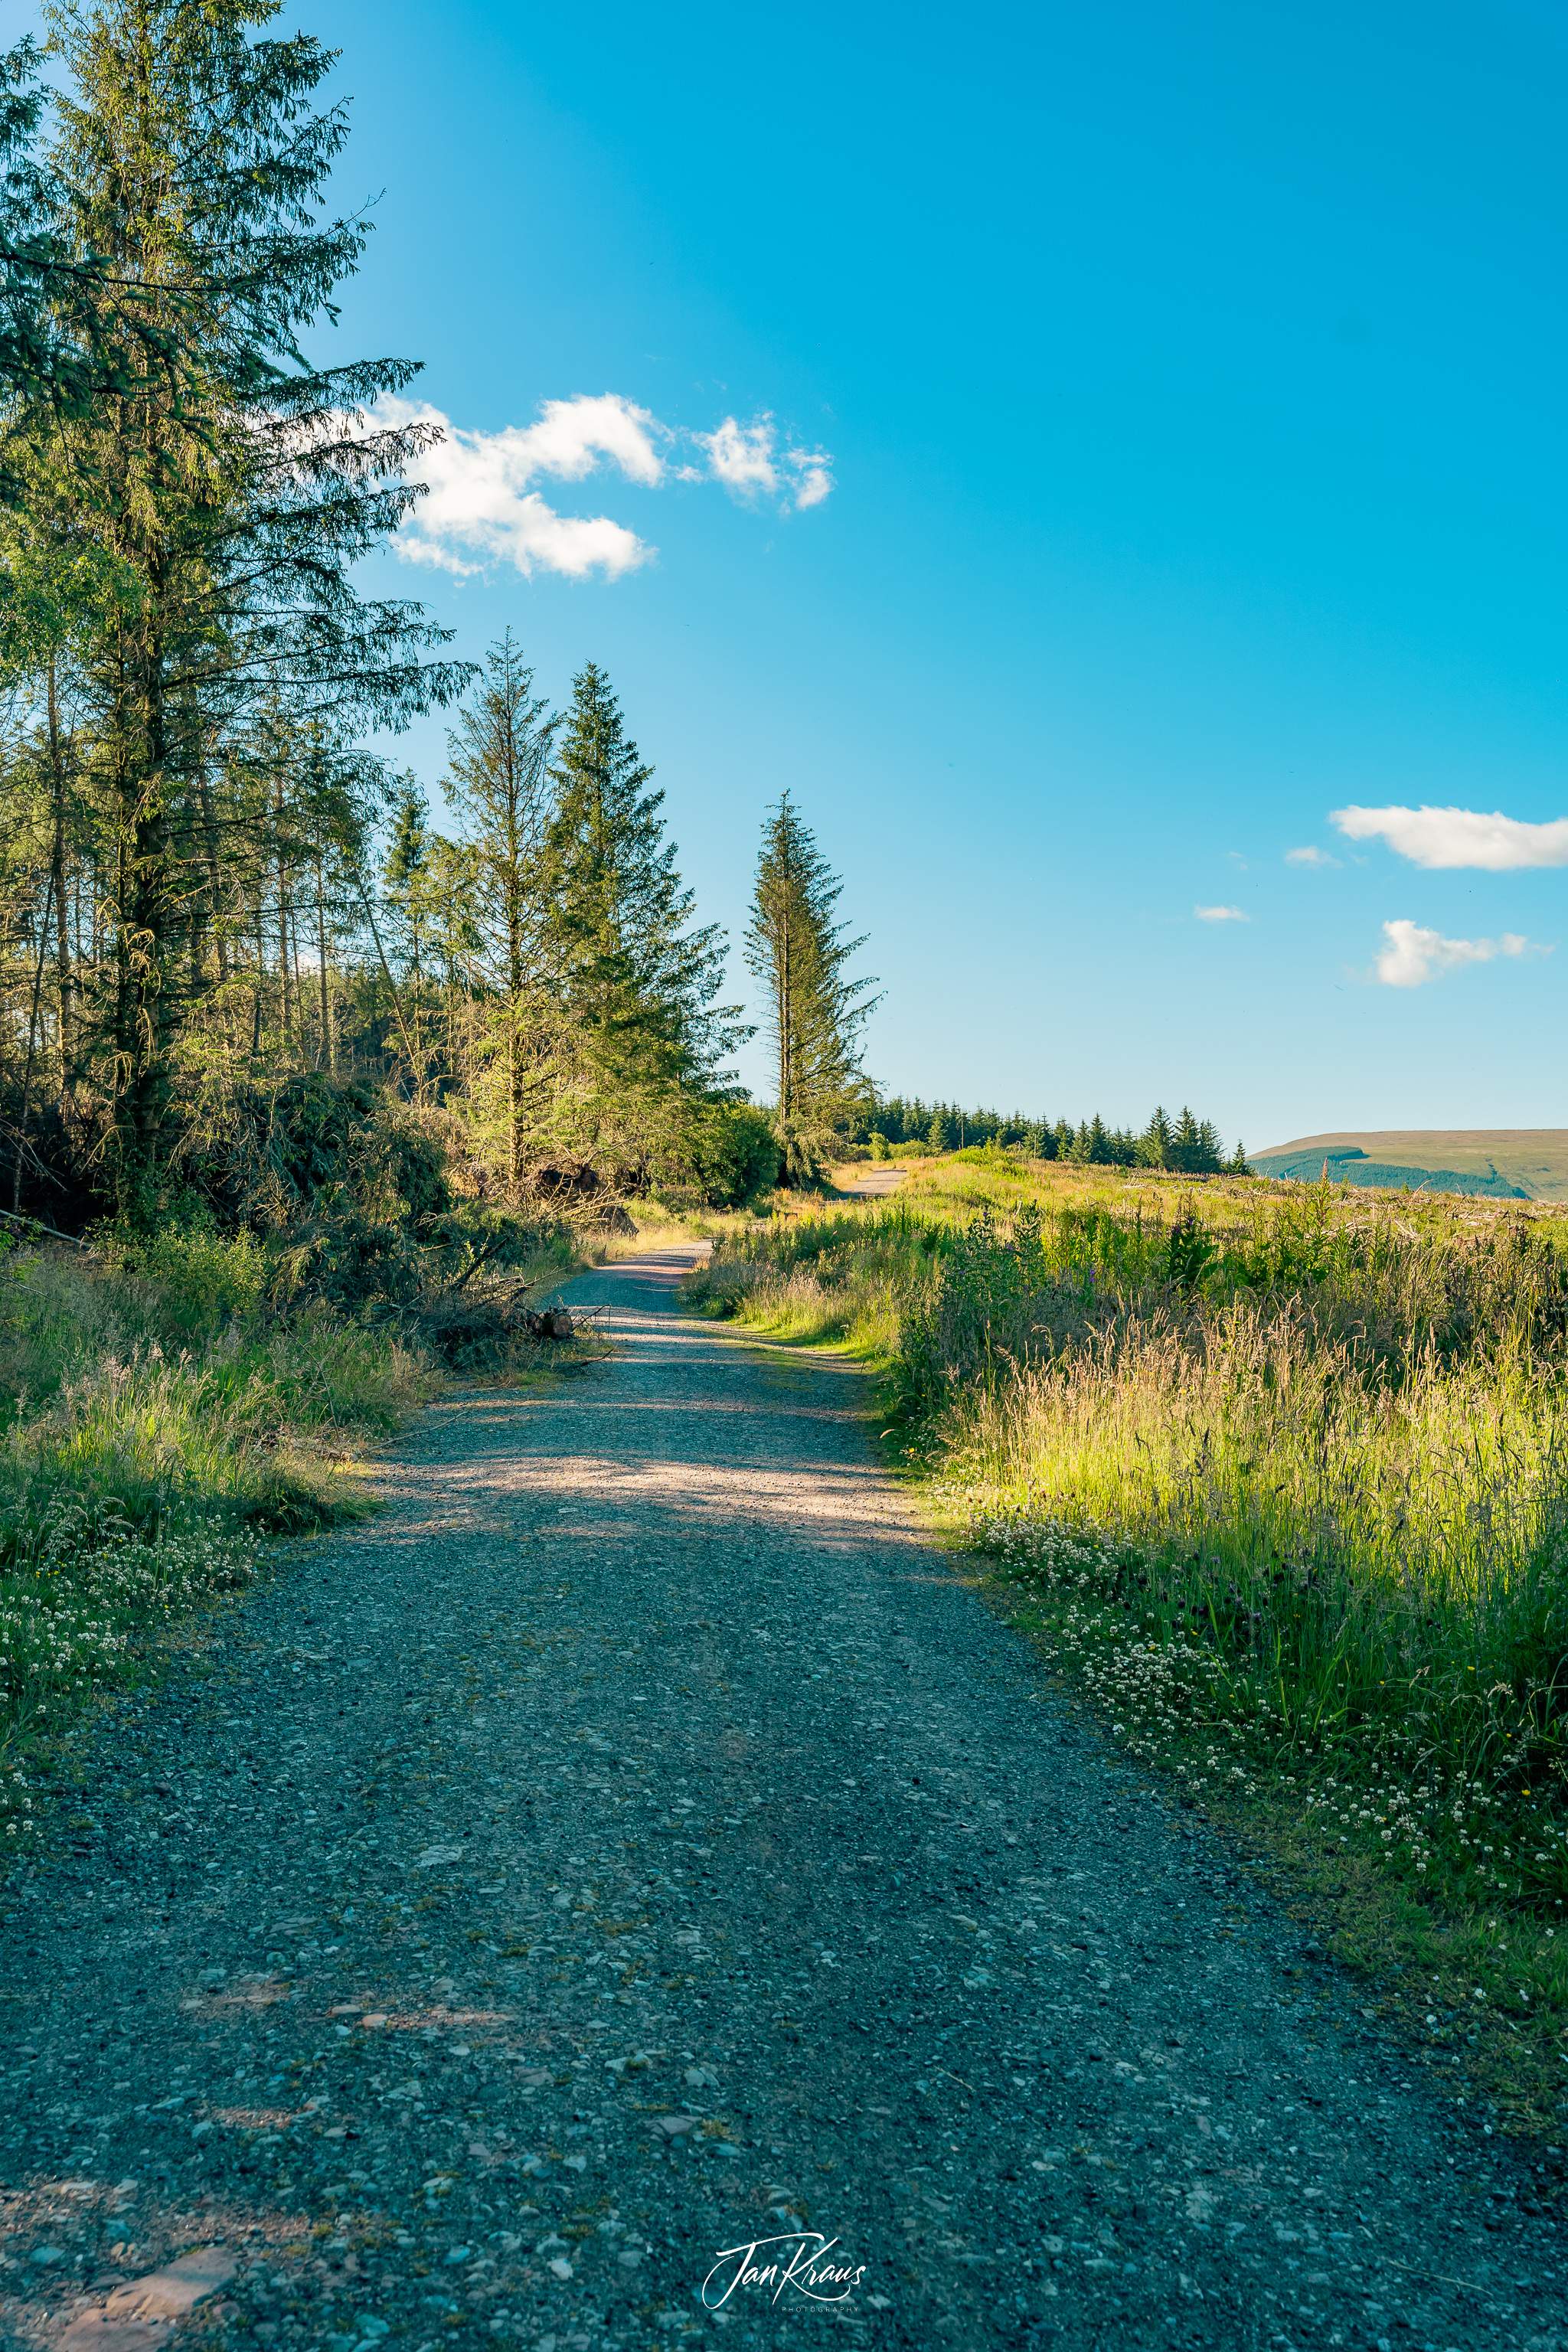 A road leading towards Taf Fechan Forest, Wales, UK